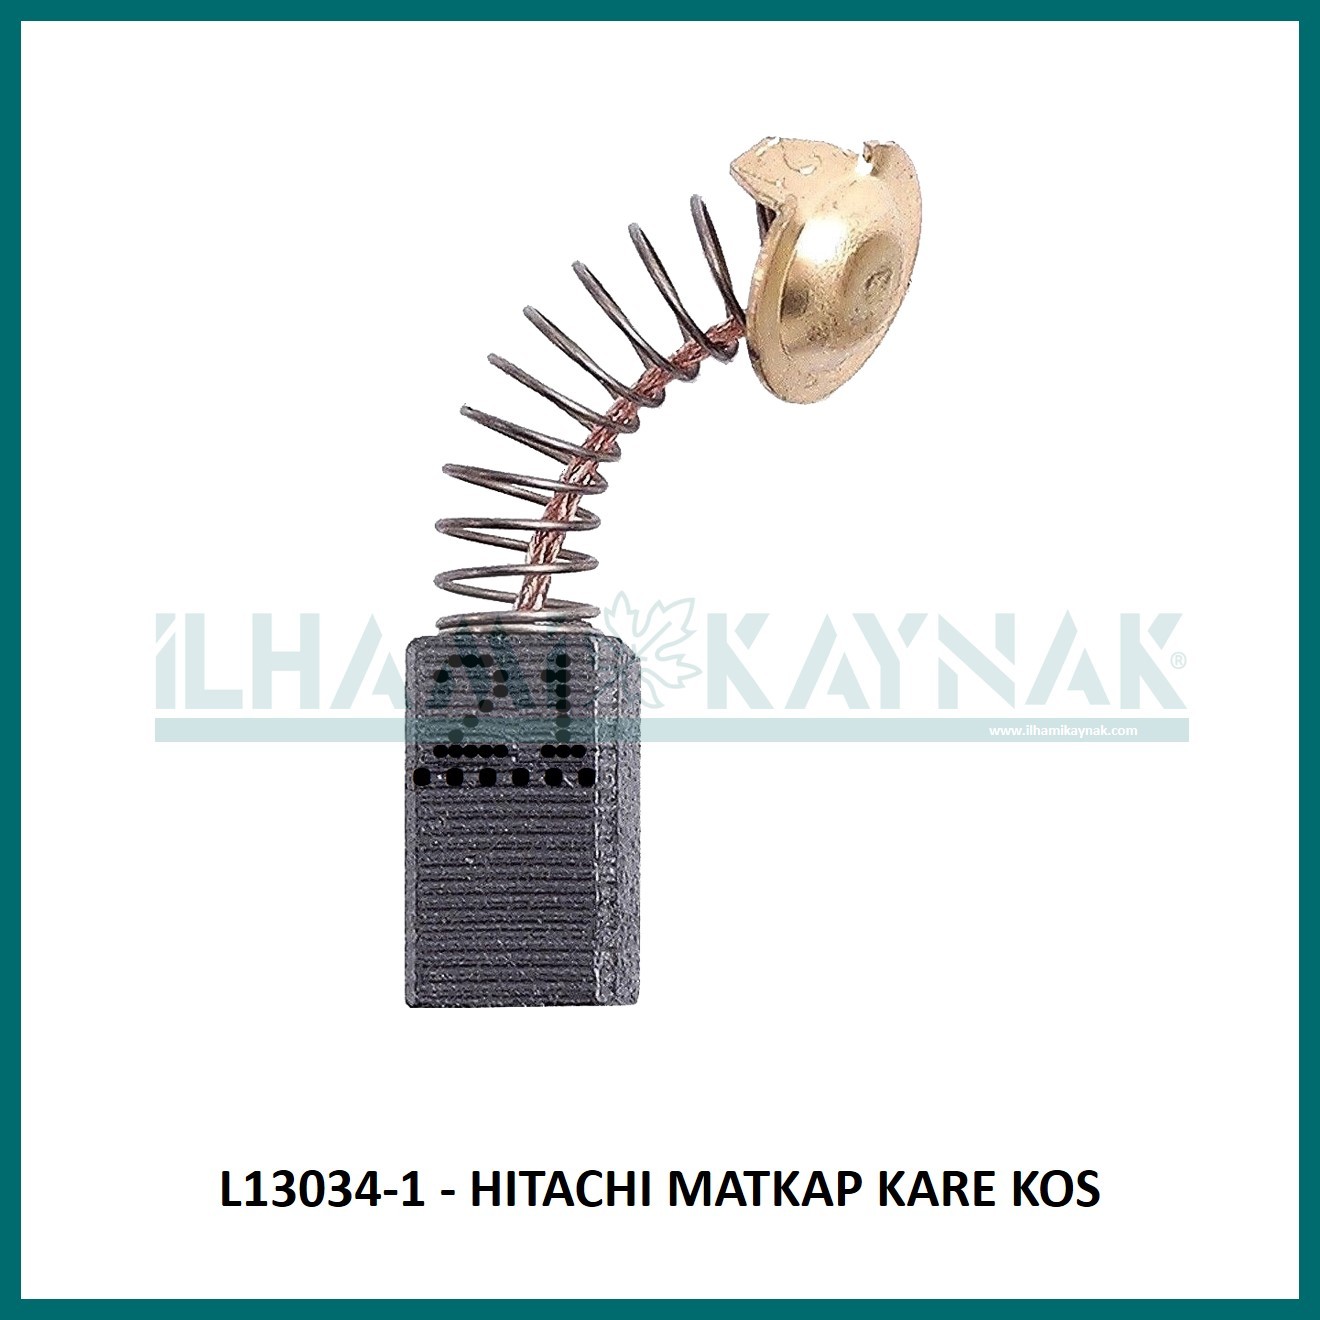 L13034-1 - HITACHI MATKAP KARE KOS - 6,5*7,5*13 mm - Minimum Satın Alım: 10 Adet